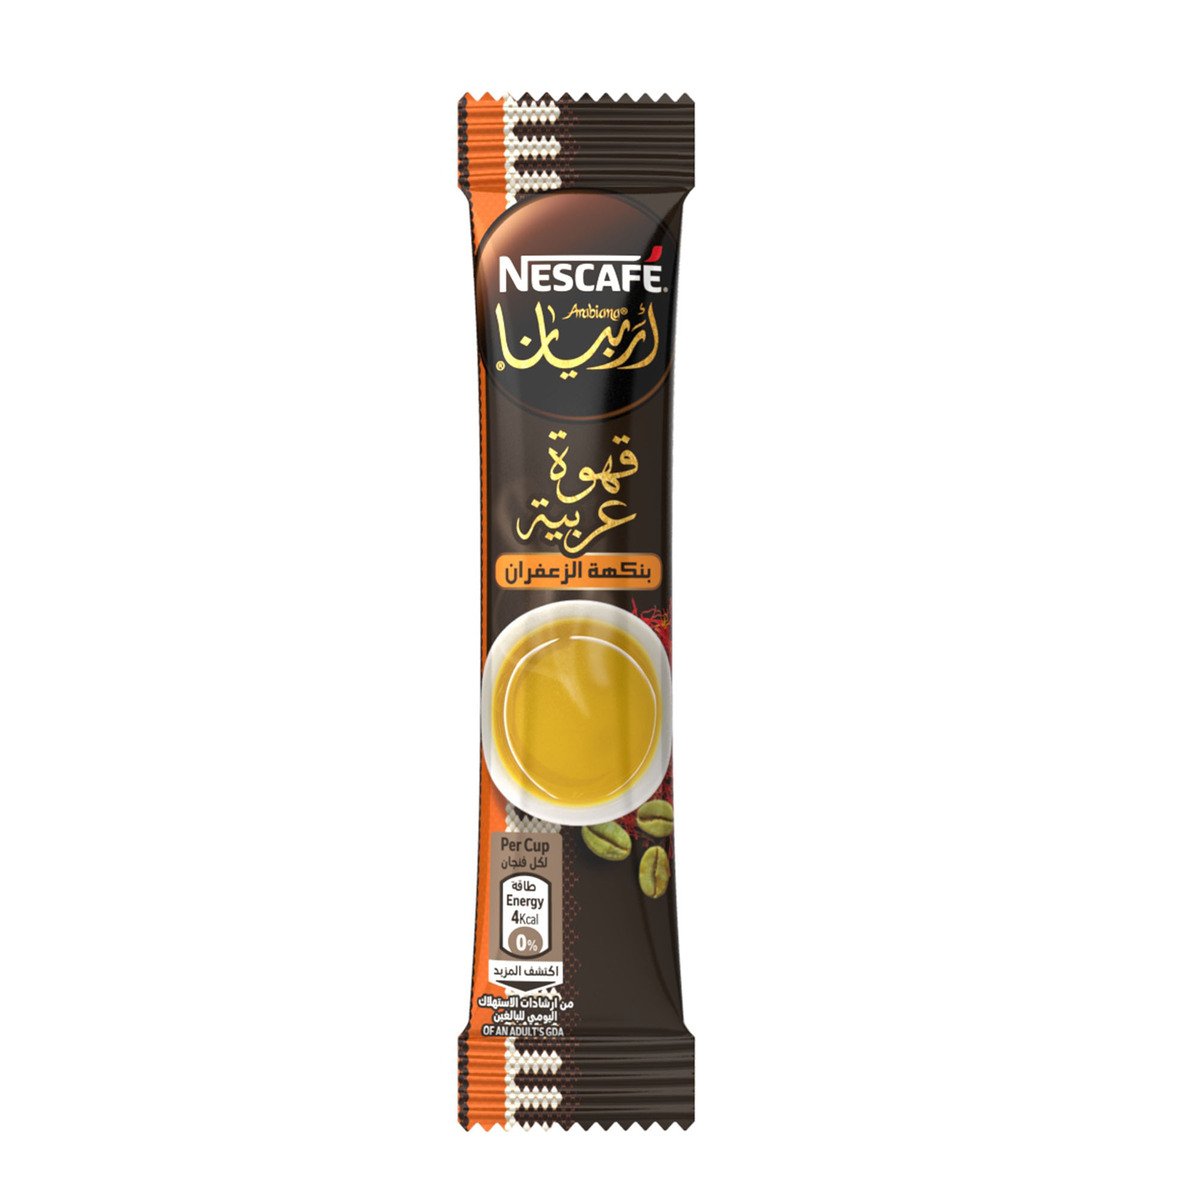 Nestle Nescafe Arabiana Saffron Flavour 20 x 3 g